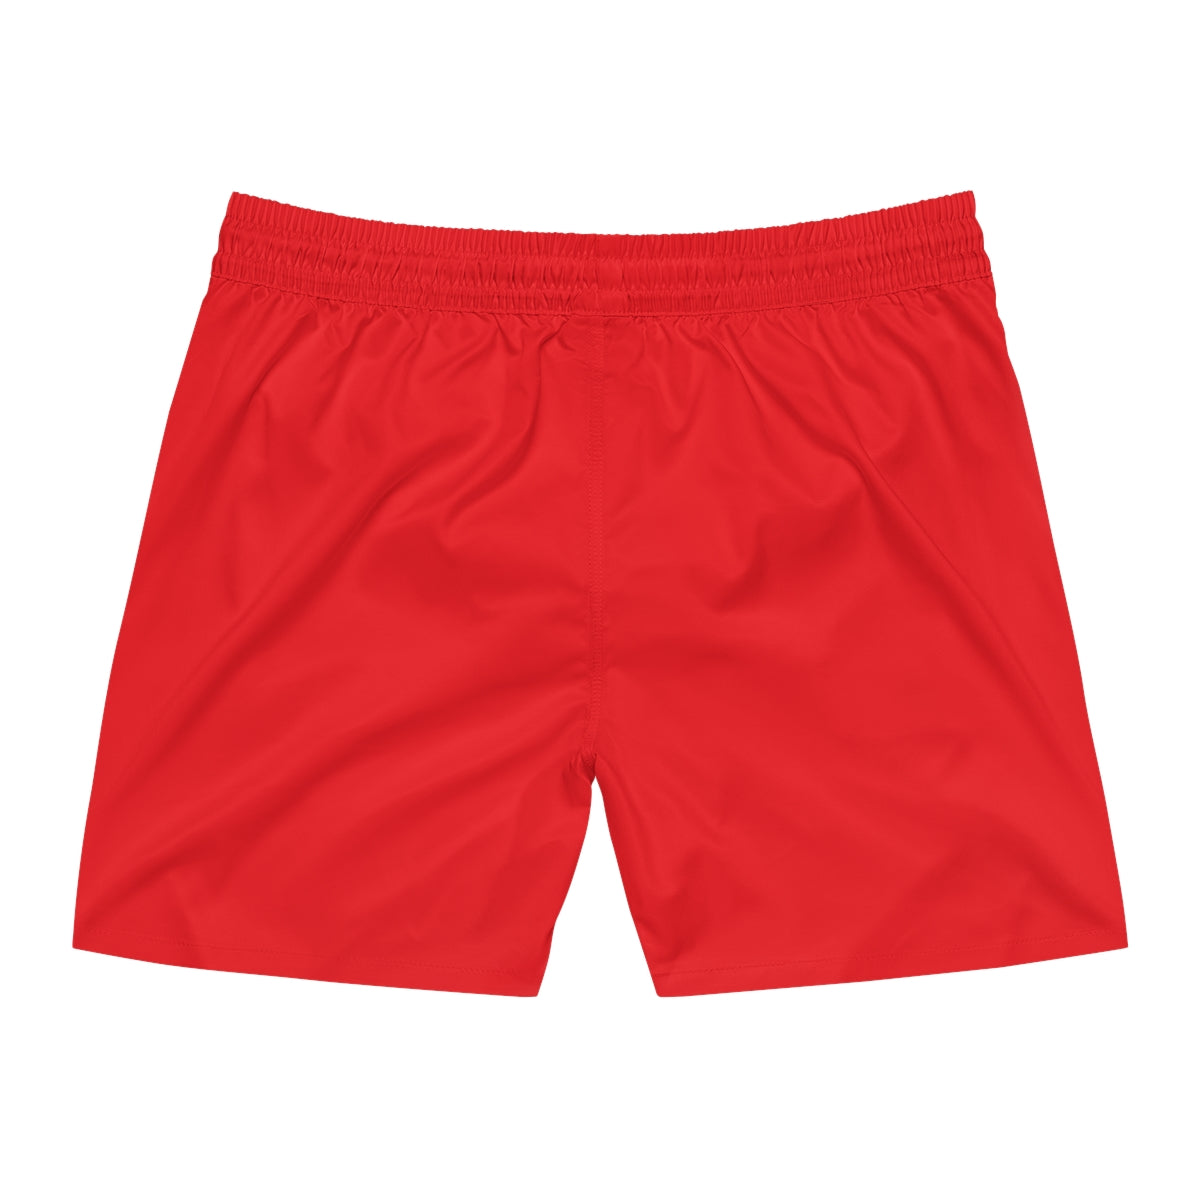 Lifeguard Shorts -  Canada